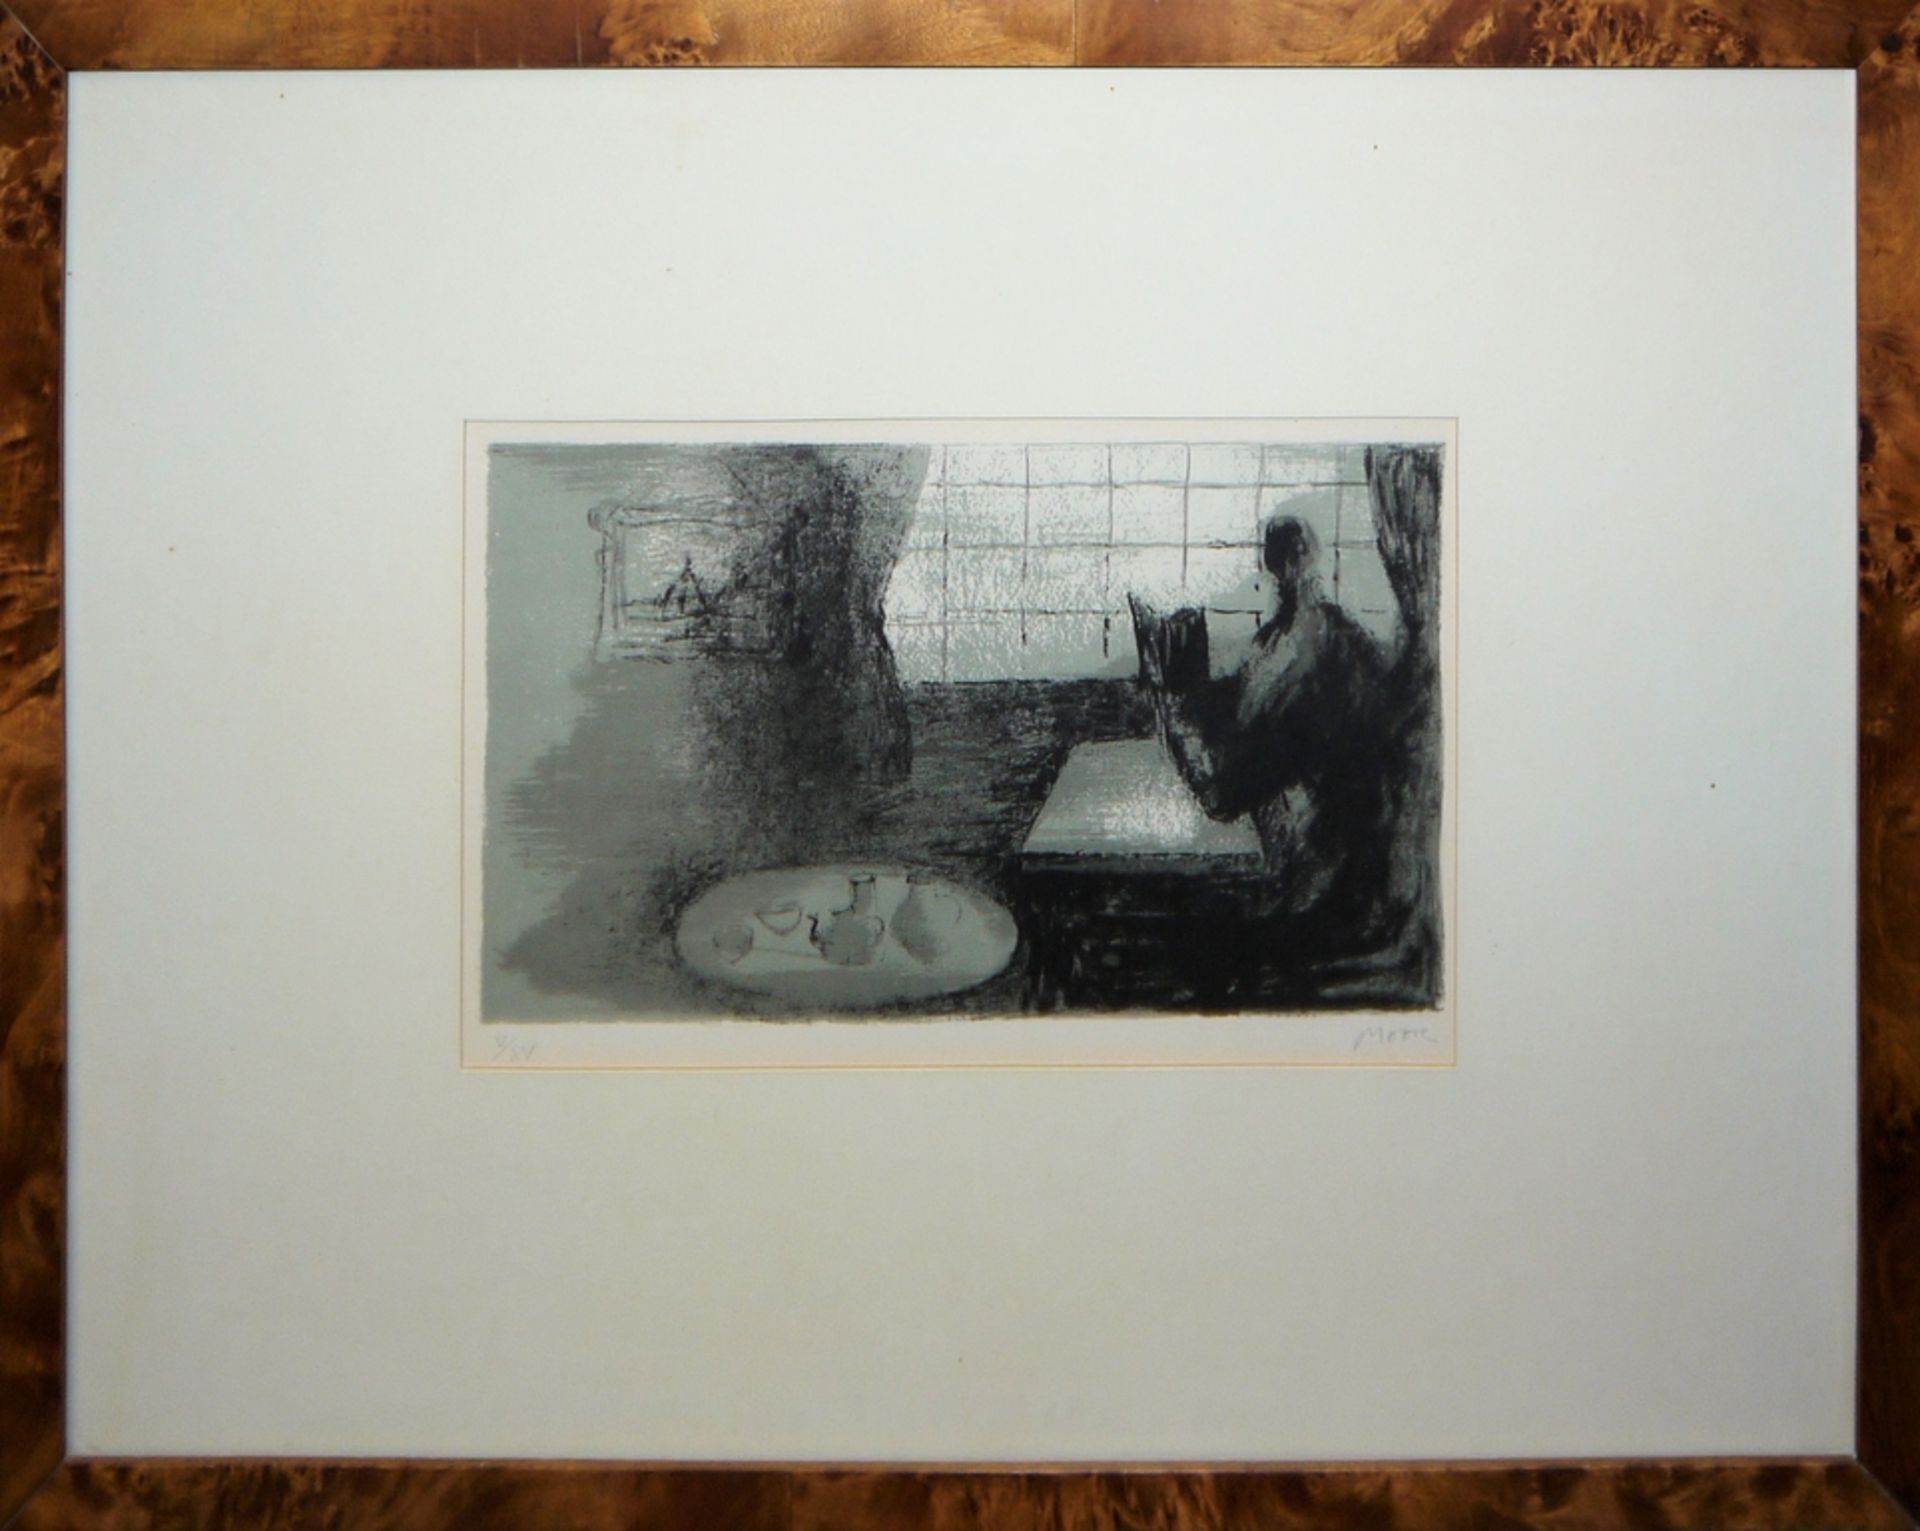 Henry Moore, Girl Reading at Window, signierte Lithographie, von 1977/78, gerahmt